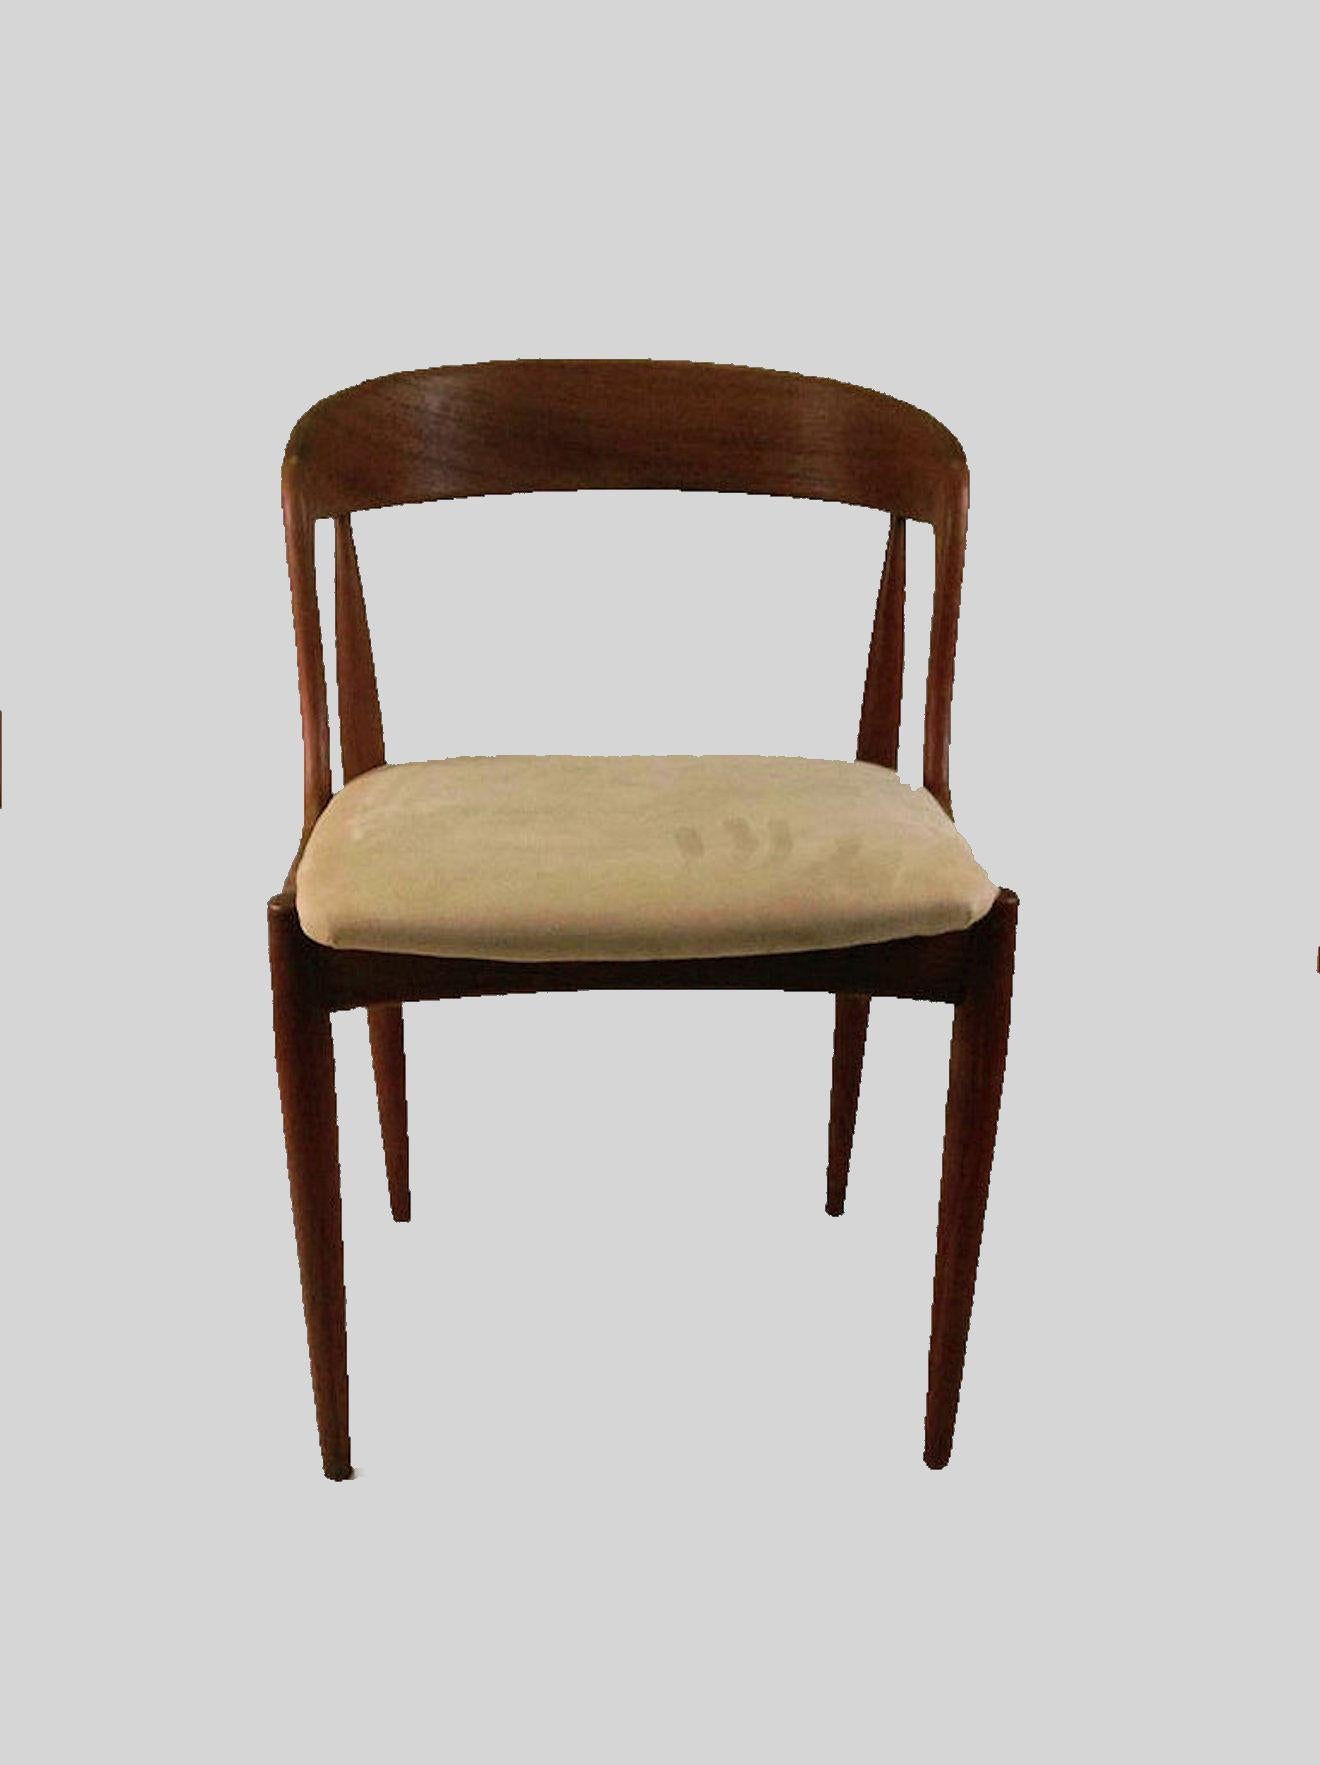 Set of six restored Johannes Andersen dining chairs in teak designed for Ørum Møbelfabrik in 1965

The chairs were designed in 19Set of six elegant organic shaped dining chairs in teak designed by the Danish designer Johannes Andersen for Uldum